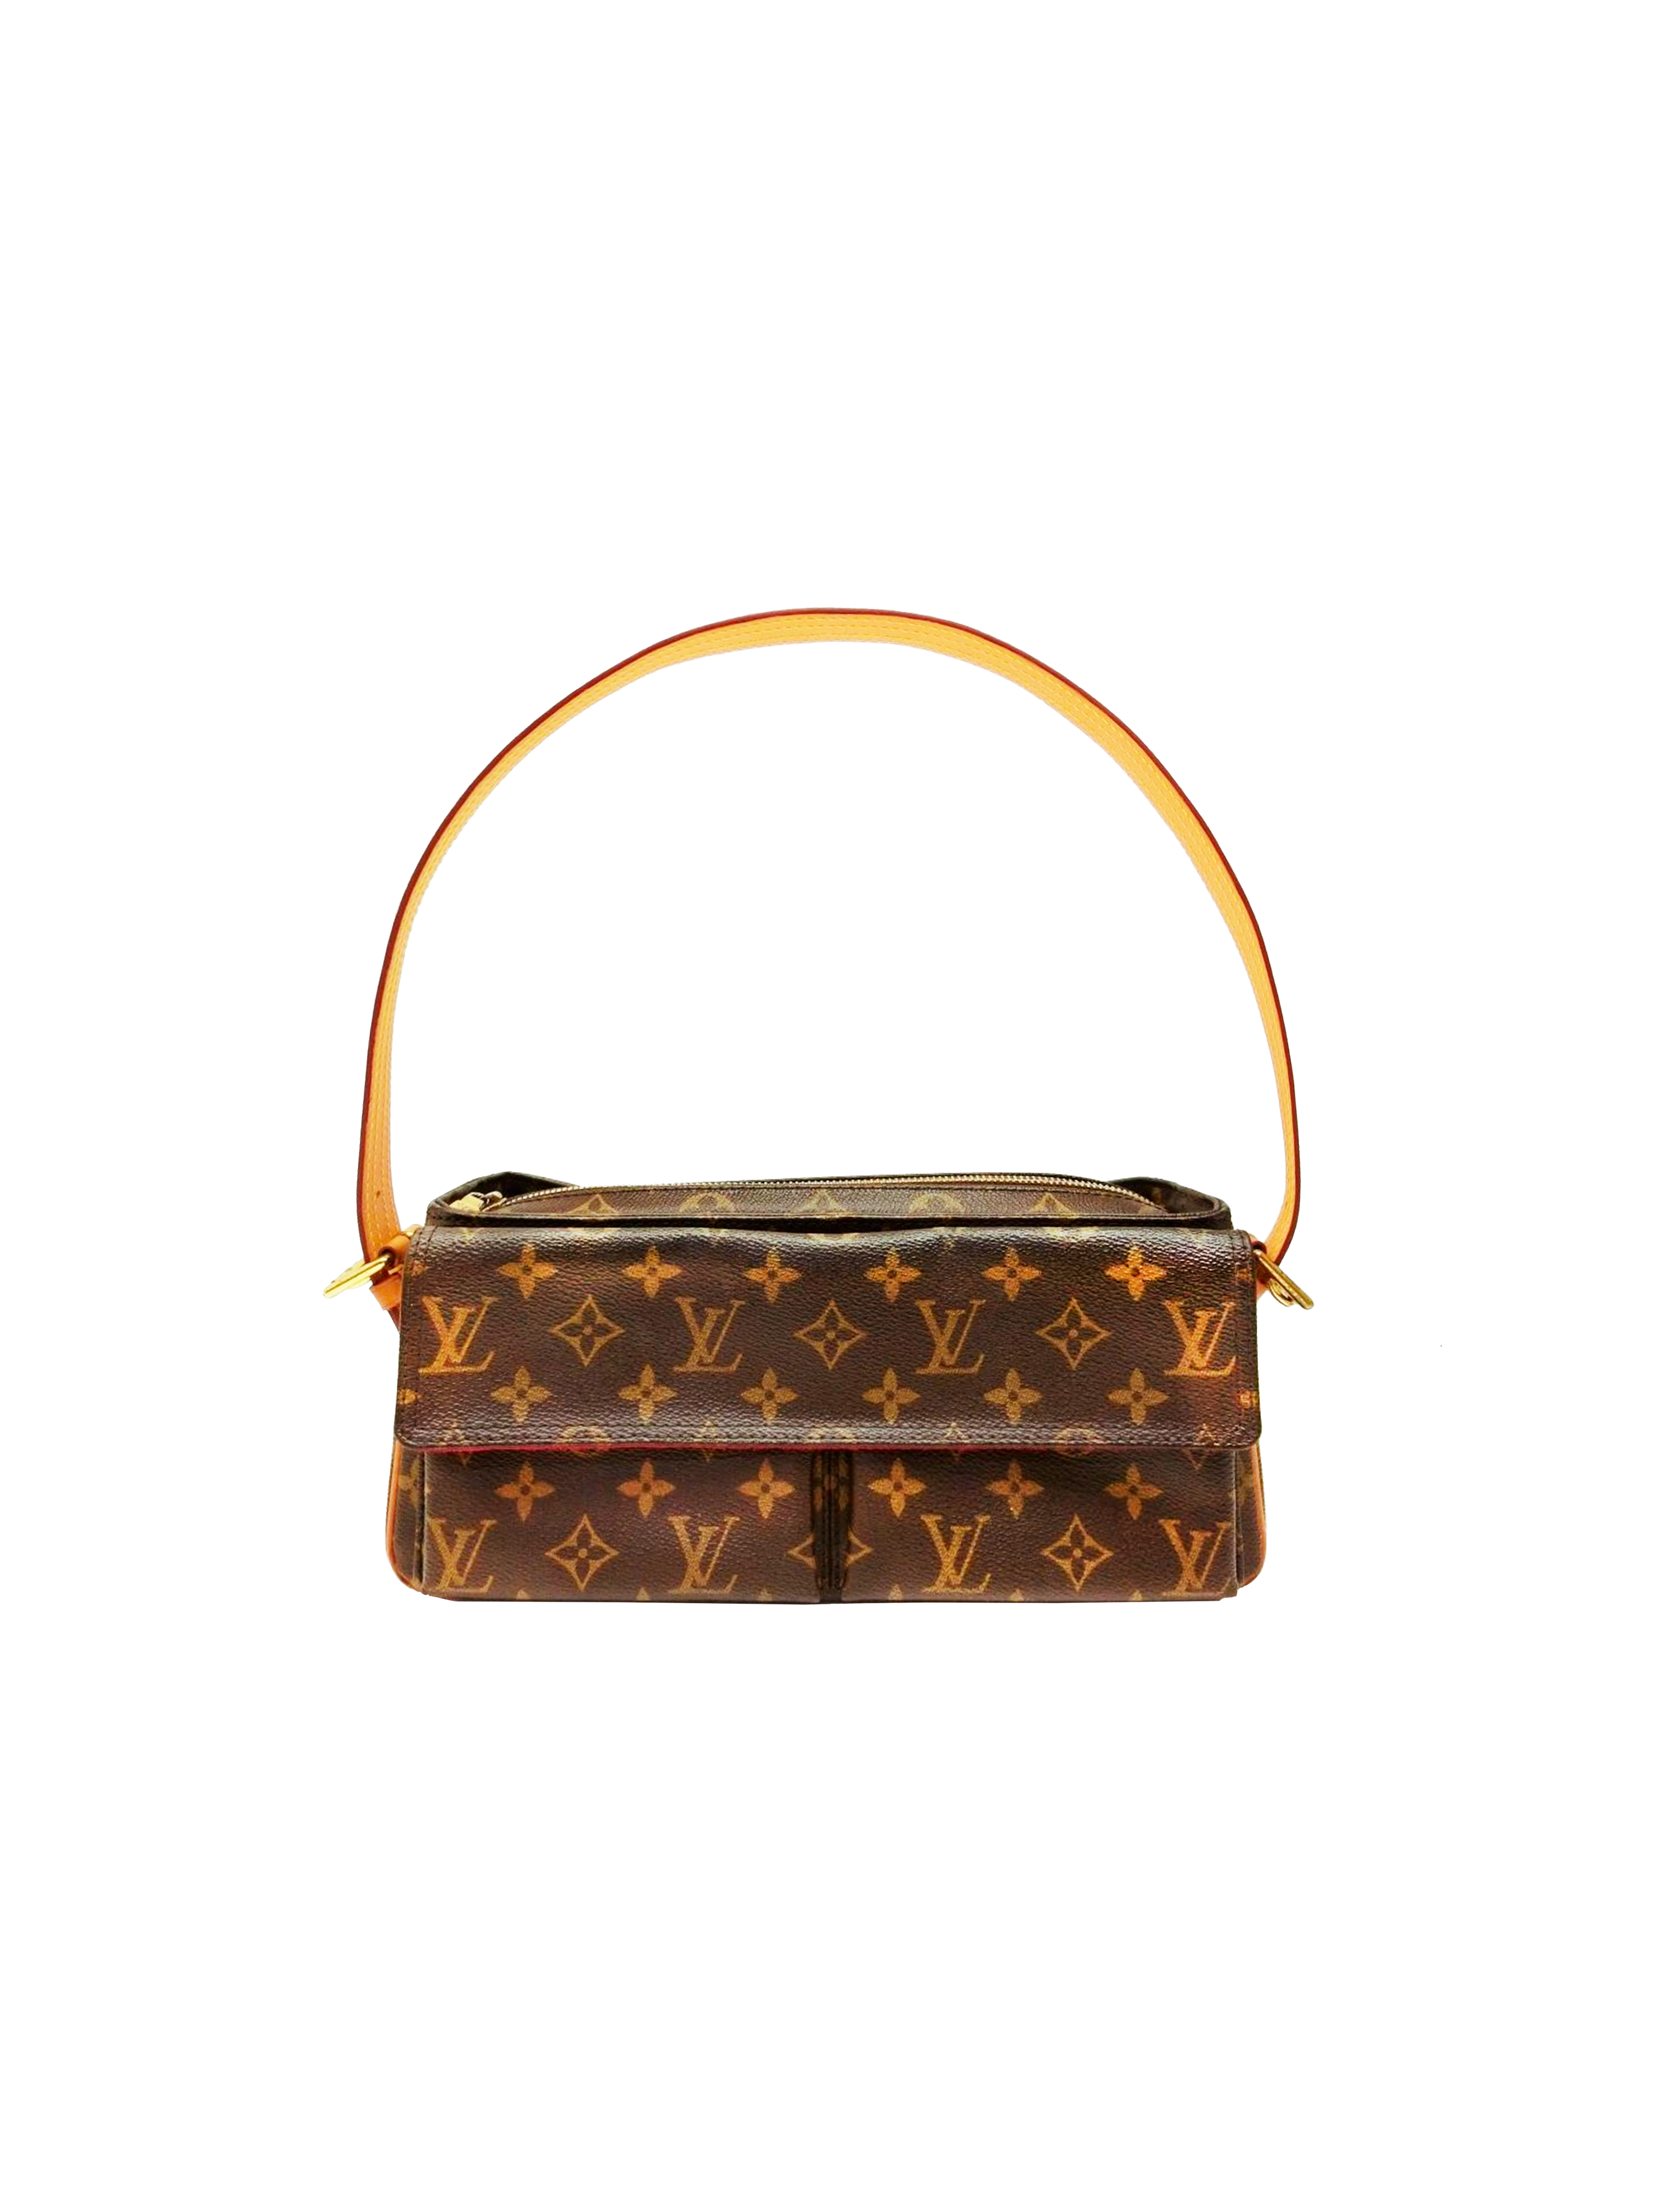 Louis Vuitton 2000s Monogram Vivasite Double Handbag